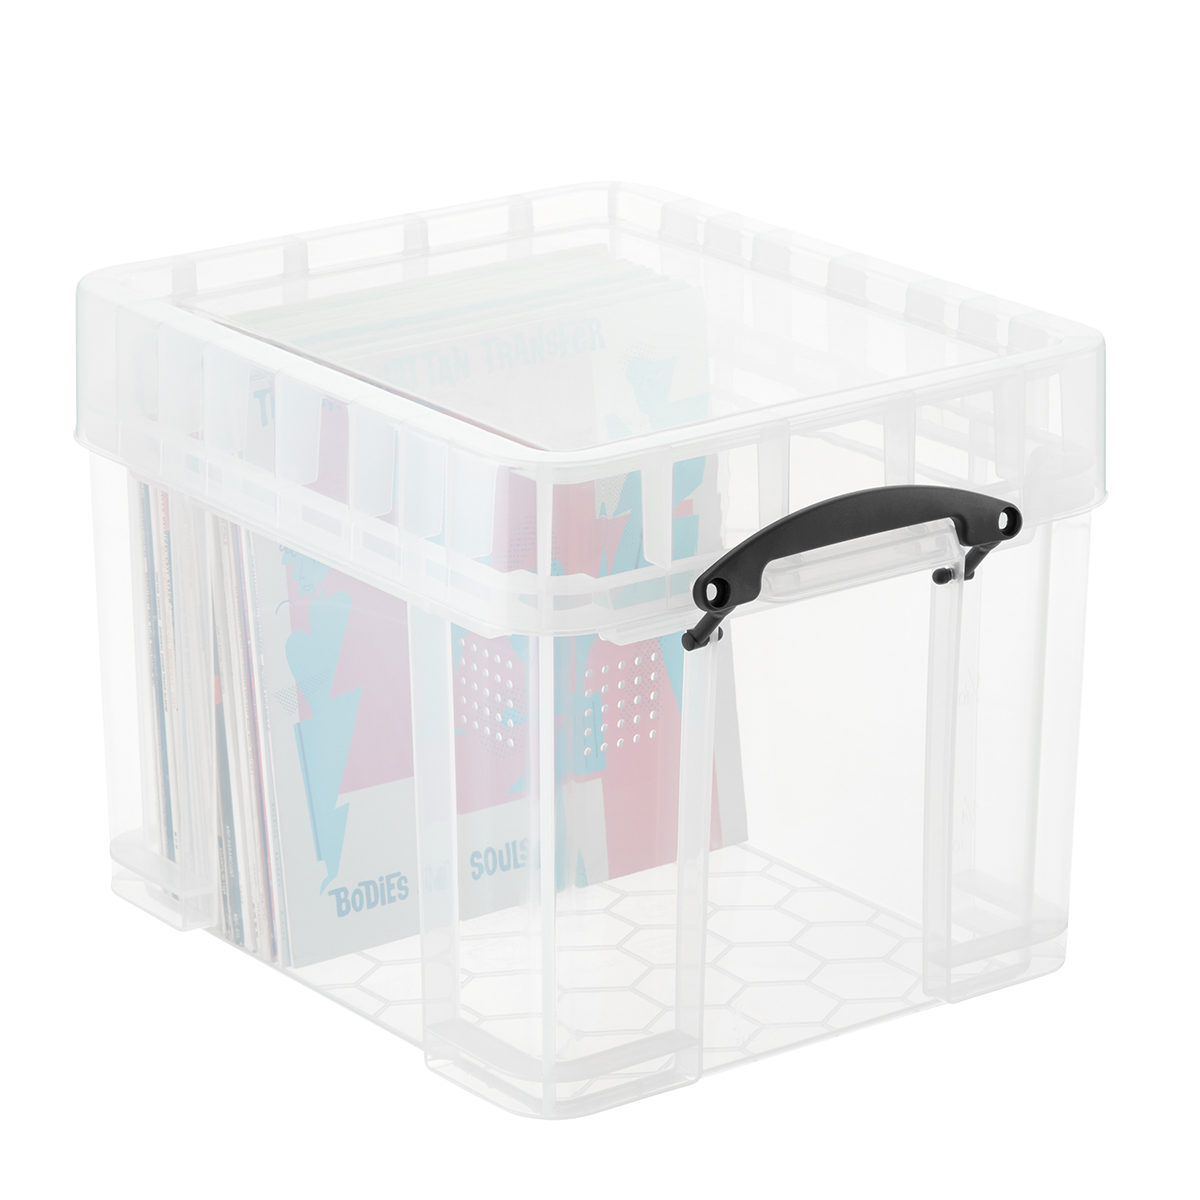 Mini Clear Plastic Storage Box with Locking Lid Portable Jewelry